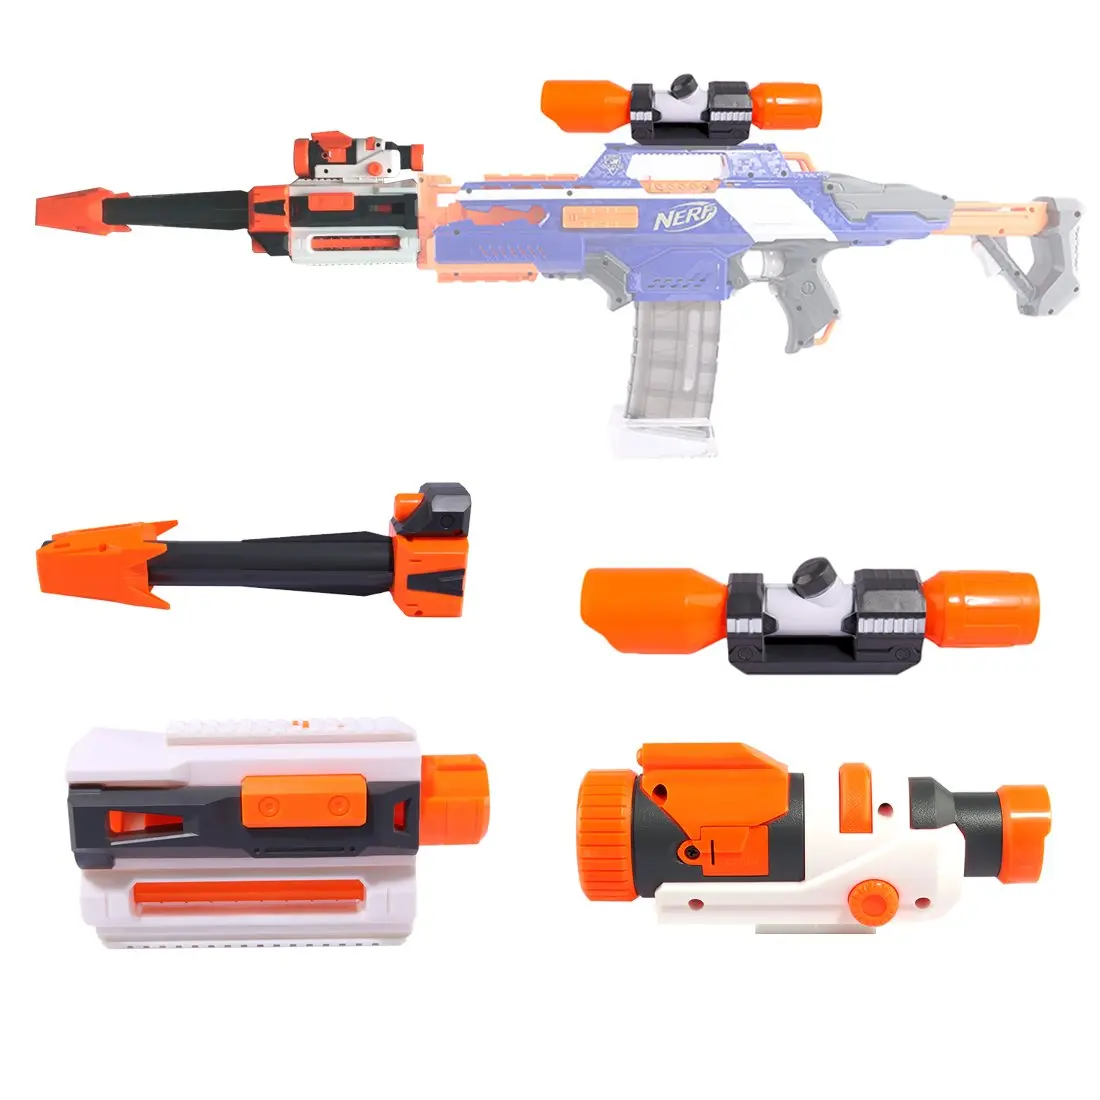 

Toy Gun Modification Accessories Set for Nerf N-strike Elite Series Muffler Tail Stock Flashlight Universal Toy Gun Accessories